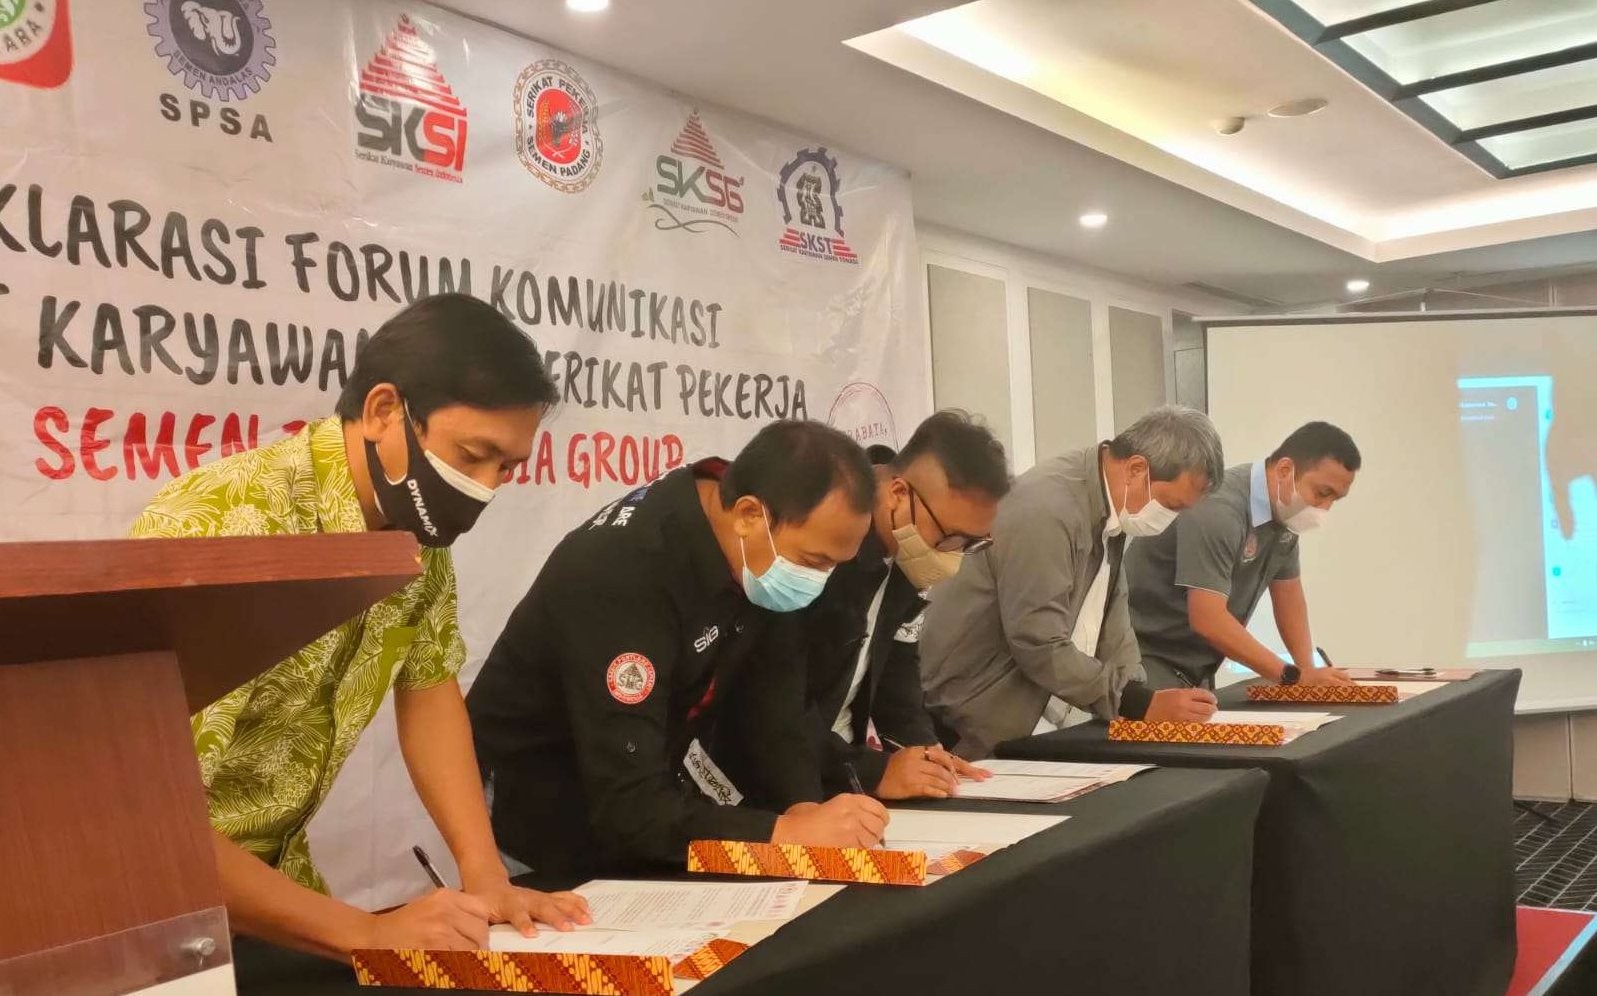 Tandatangan deklarasi forum komunikasi serikat karyawan dan serikat pekerja Semen Indonesia Group. (Foto: Istimewa)